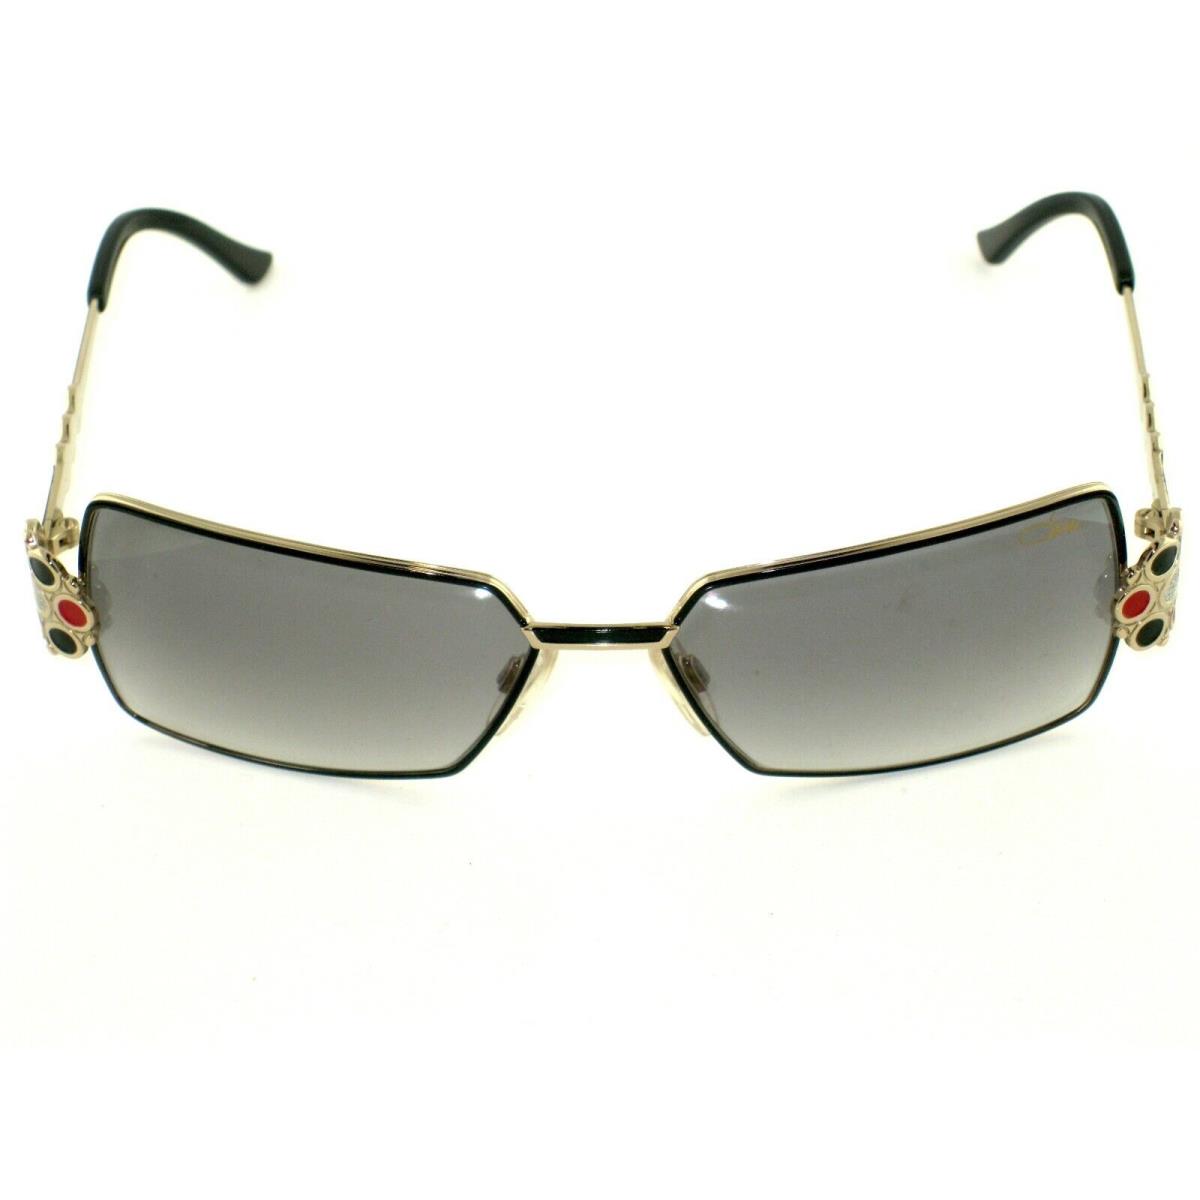 Cazal Sunglasses Mod. 971 Col. 716 58-16-120 Designer Eyewear Nos